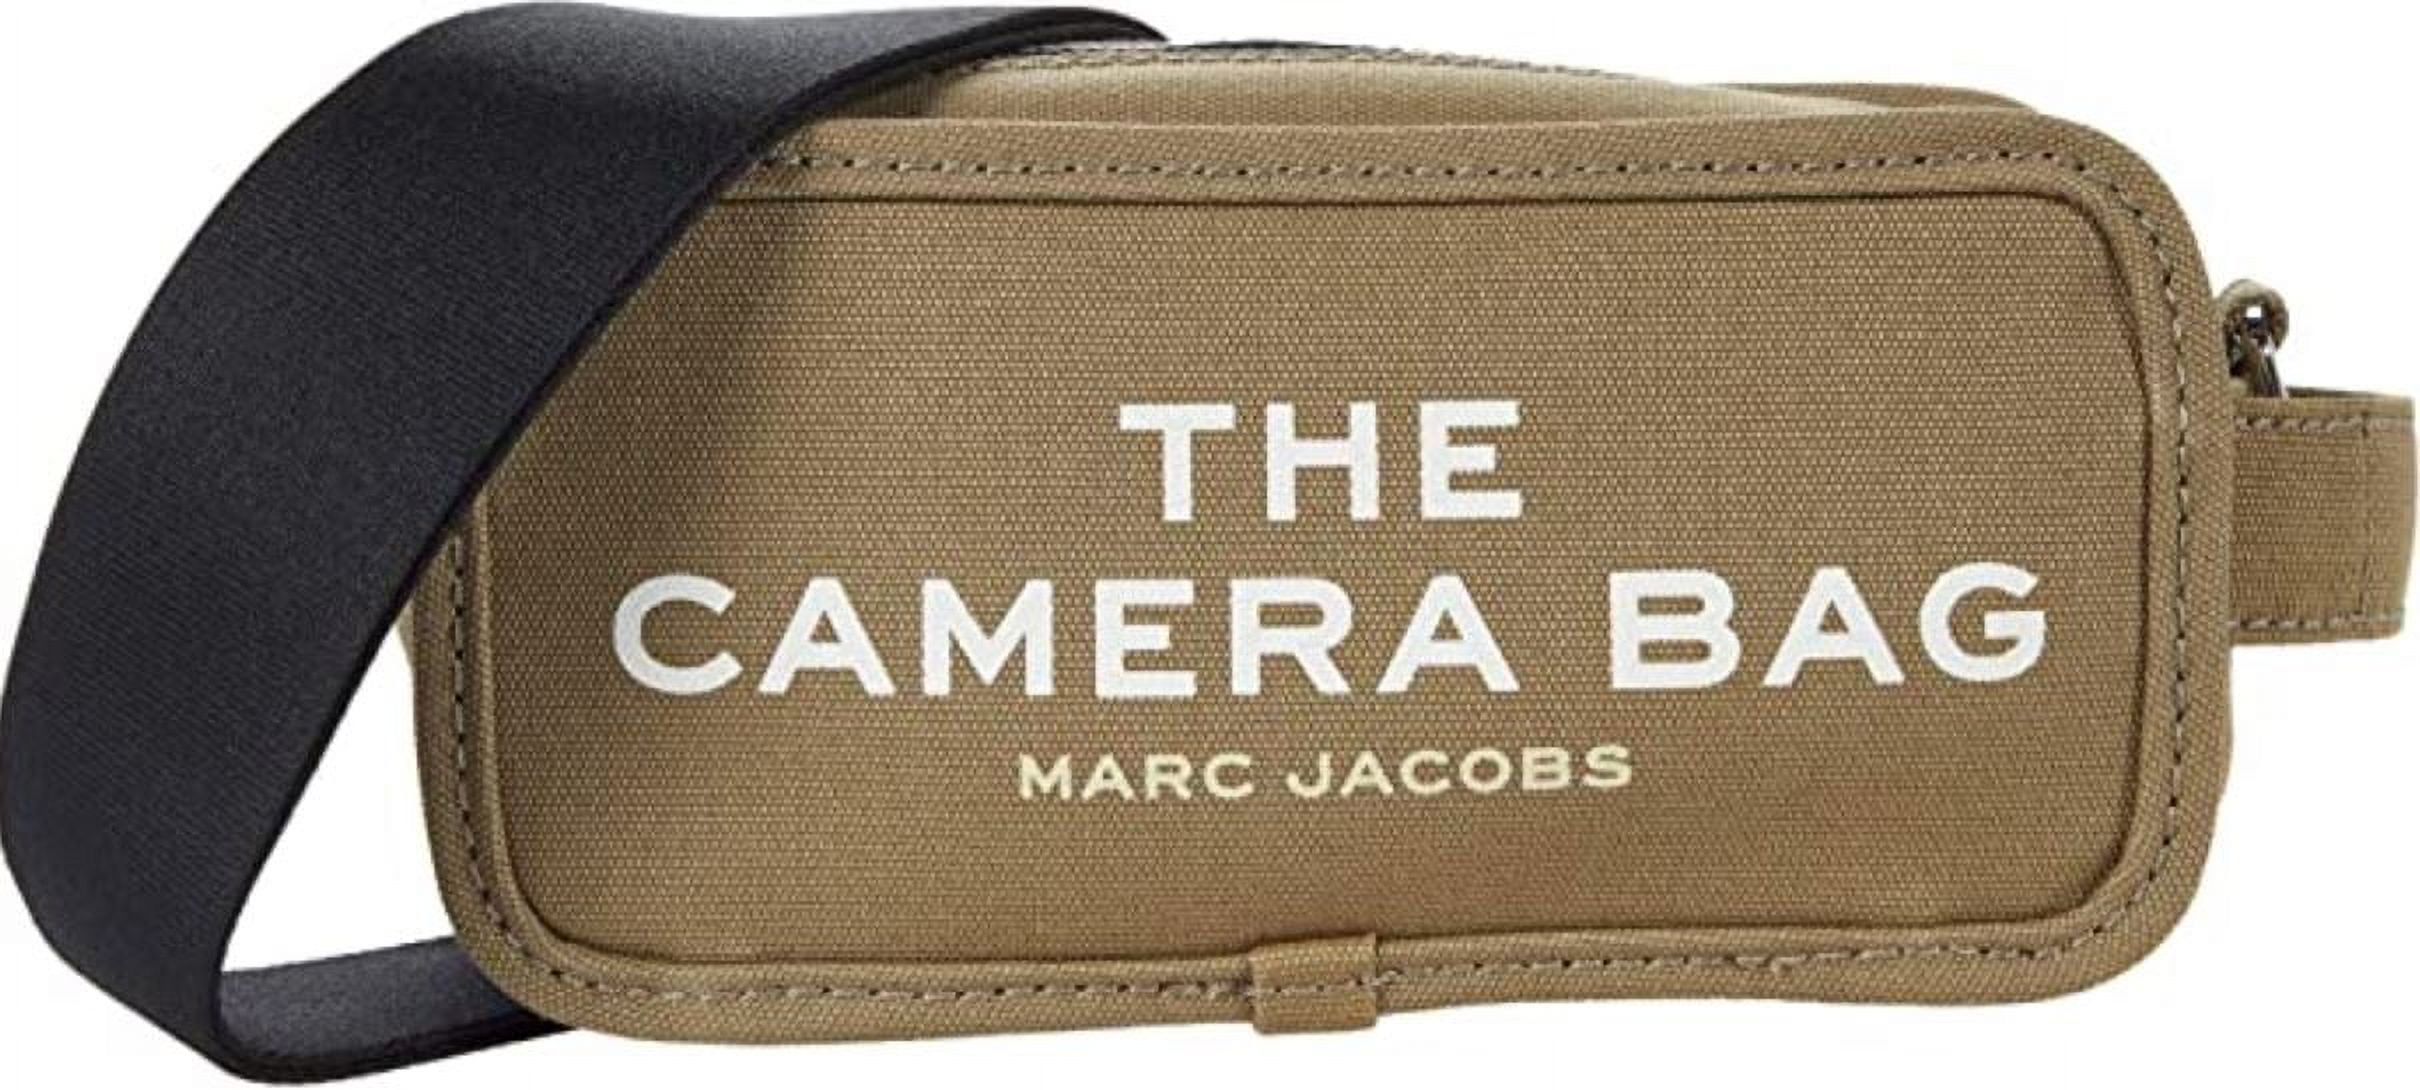 MARC JACOBS: The Camera Bag canvas bag - Black  Marc Jacobs crossbody bags  M0017040 online at